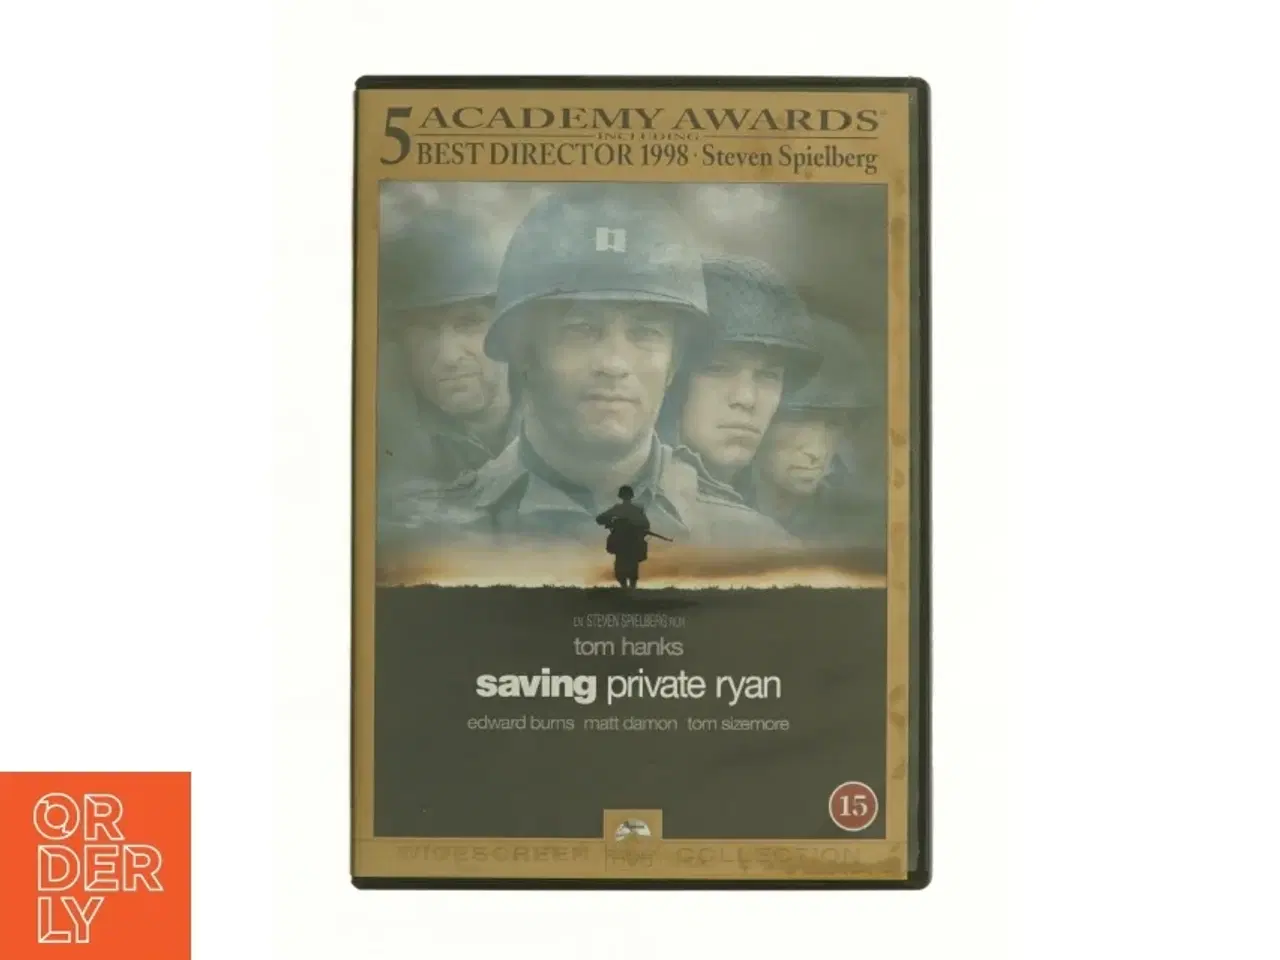 Billede 1 - Saving private ryan fra dvd